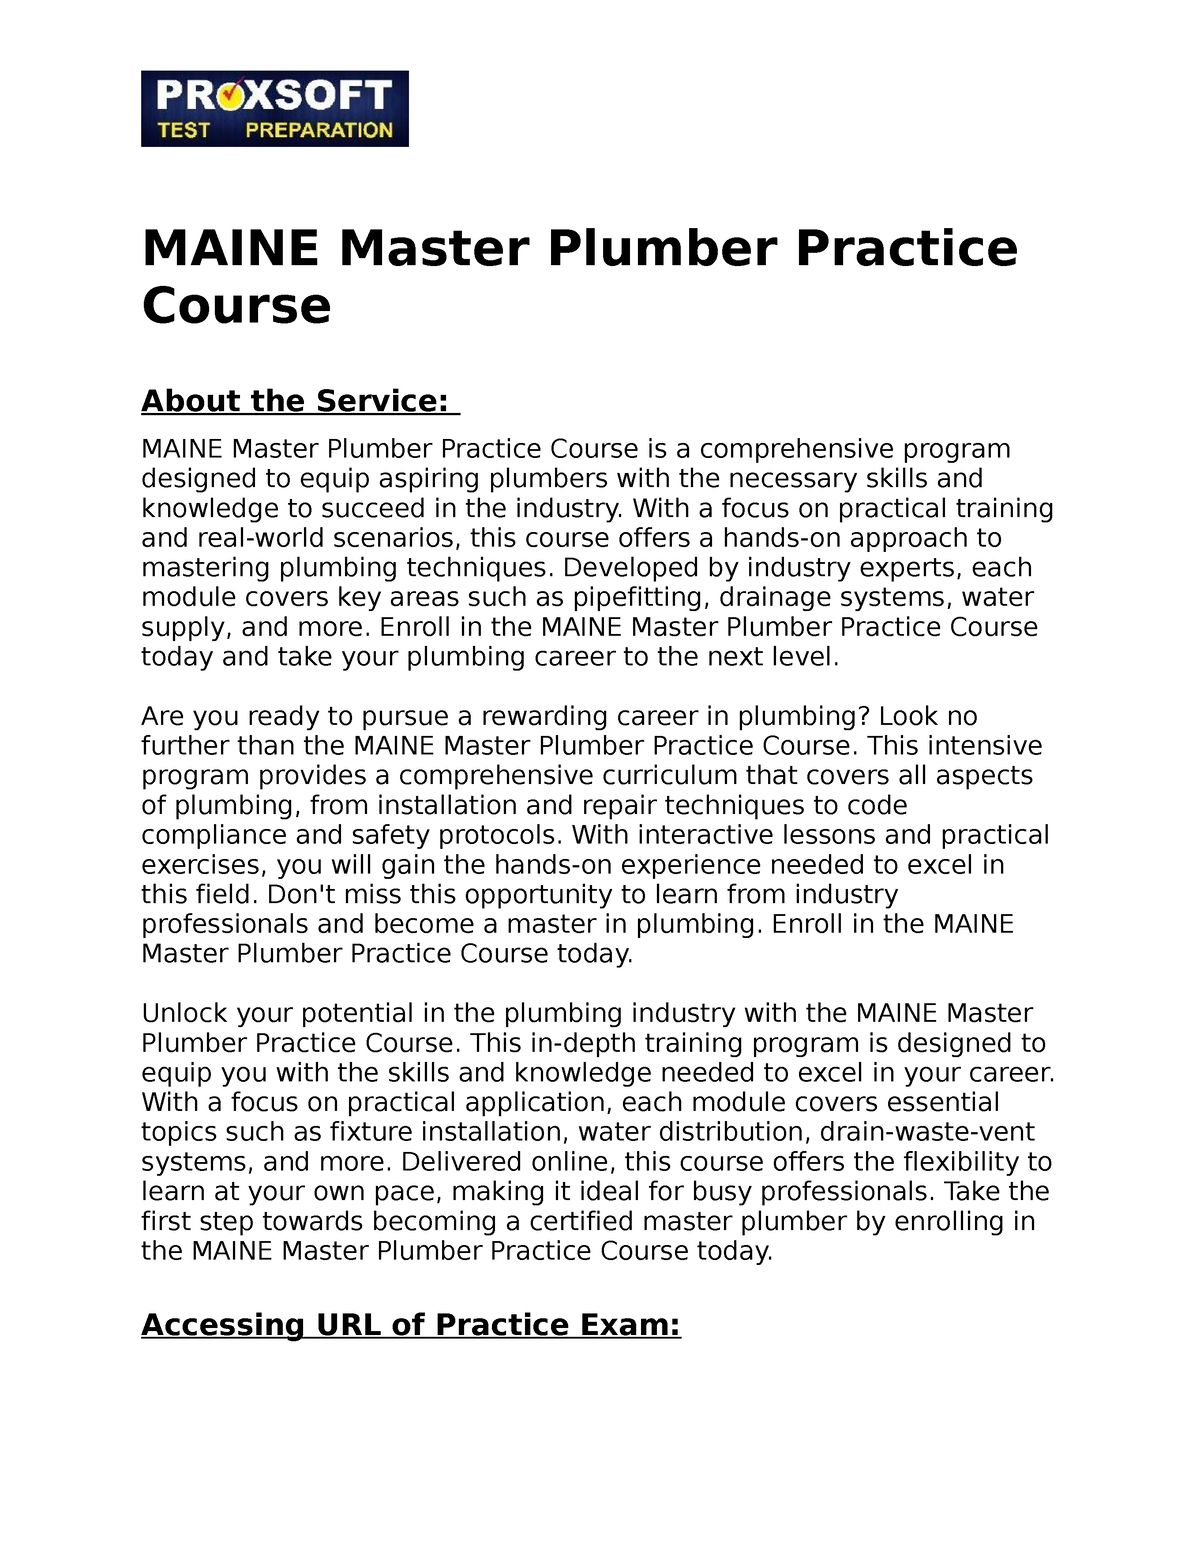 Maine plumber installer license prep class free